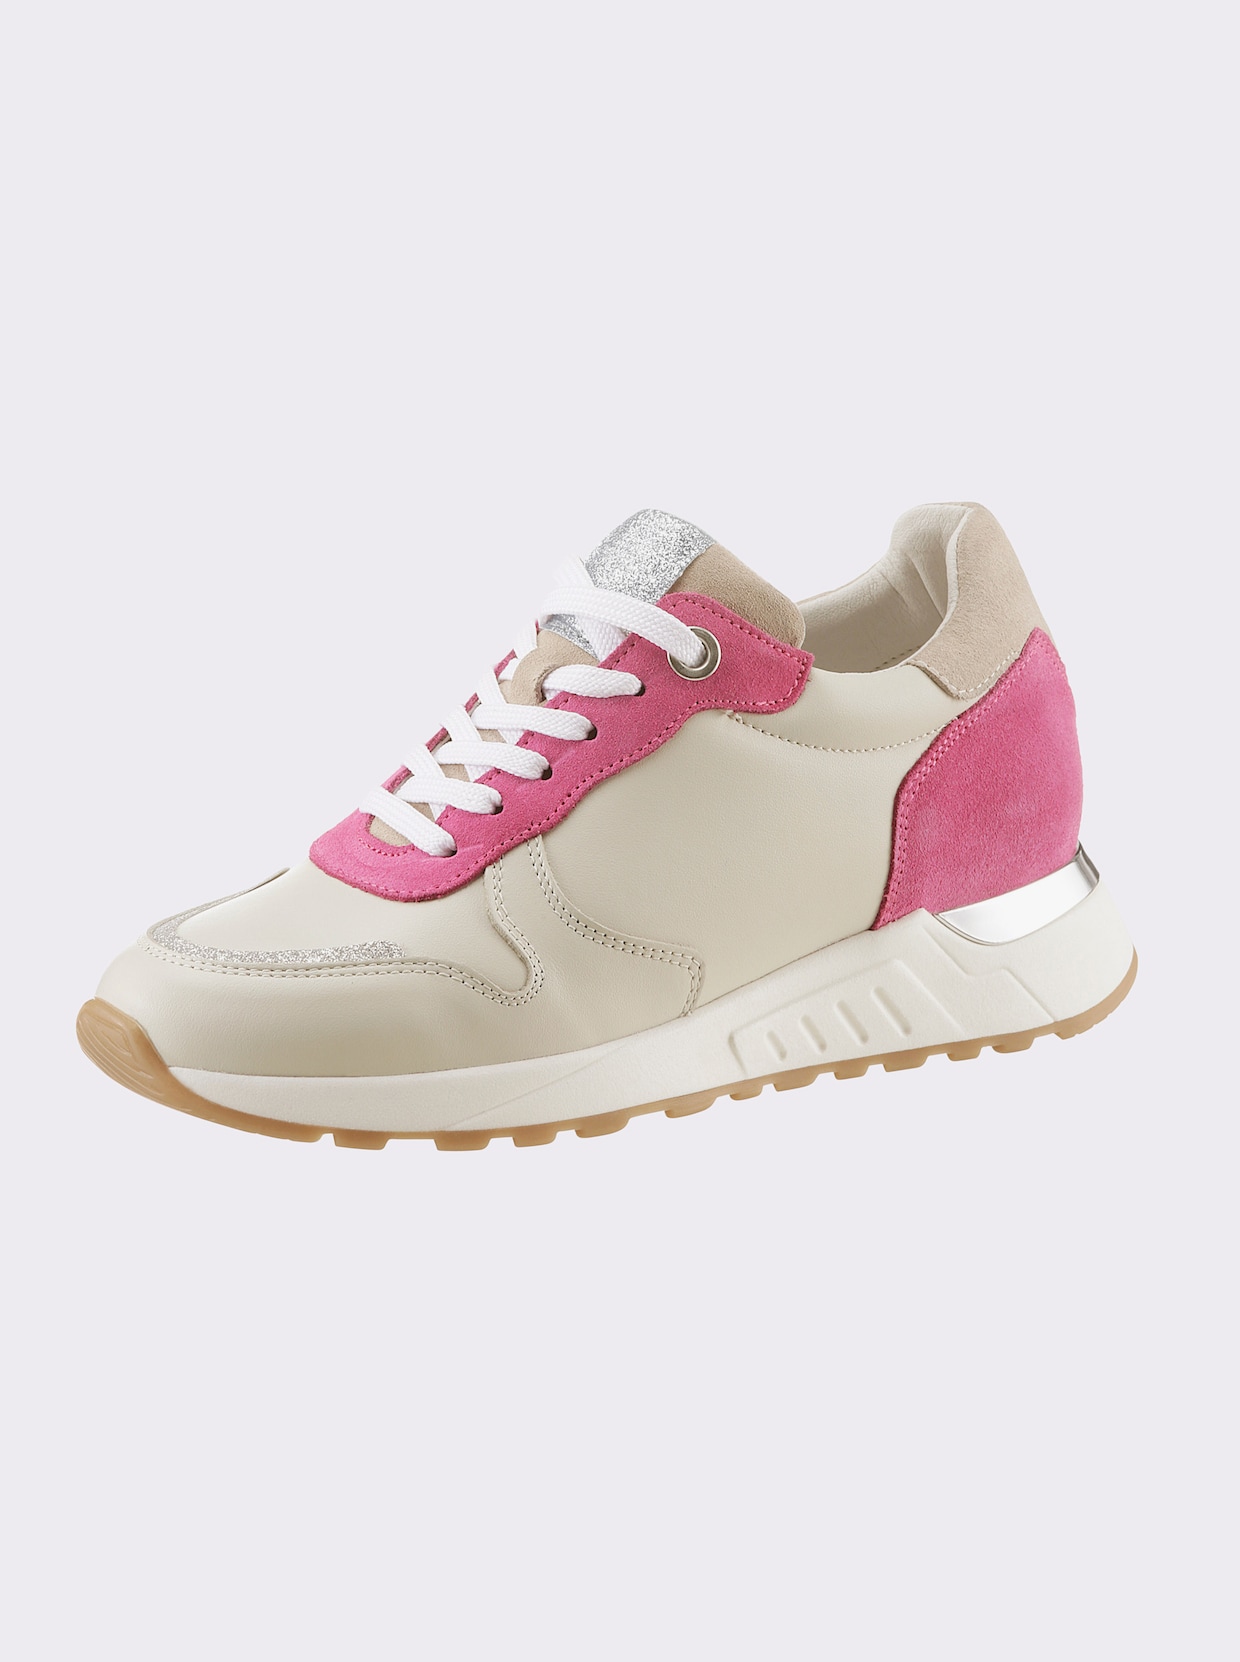 heine Sneaker - beige/pink